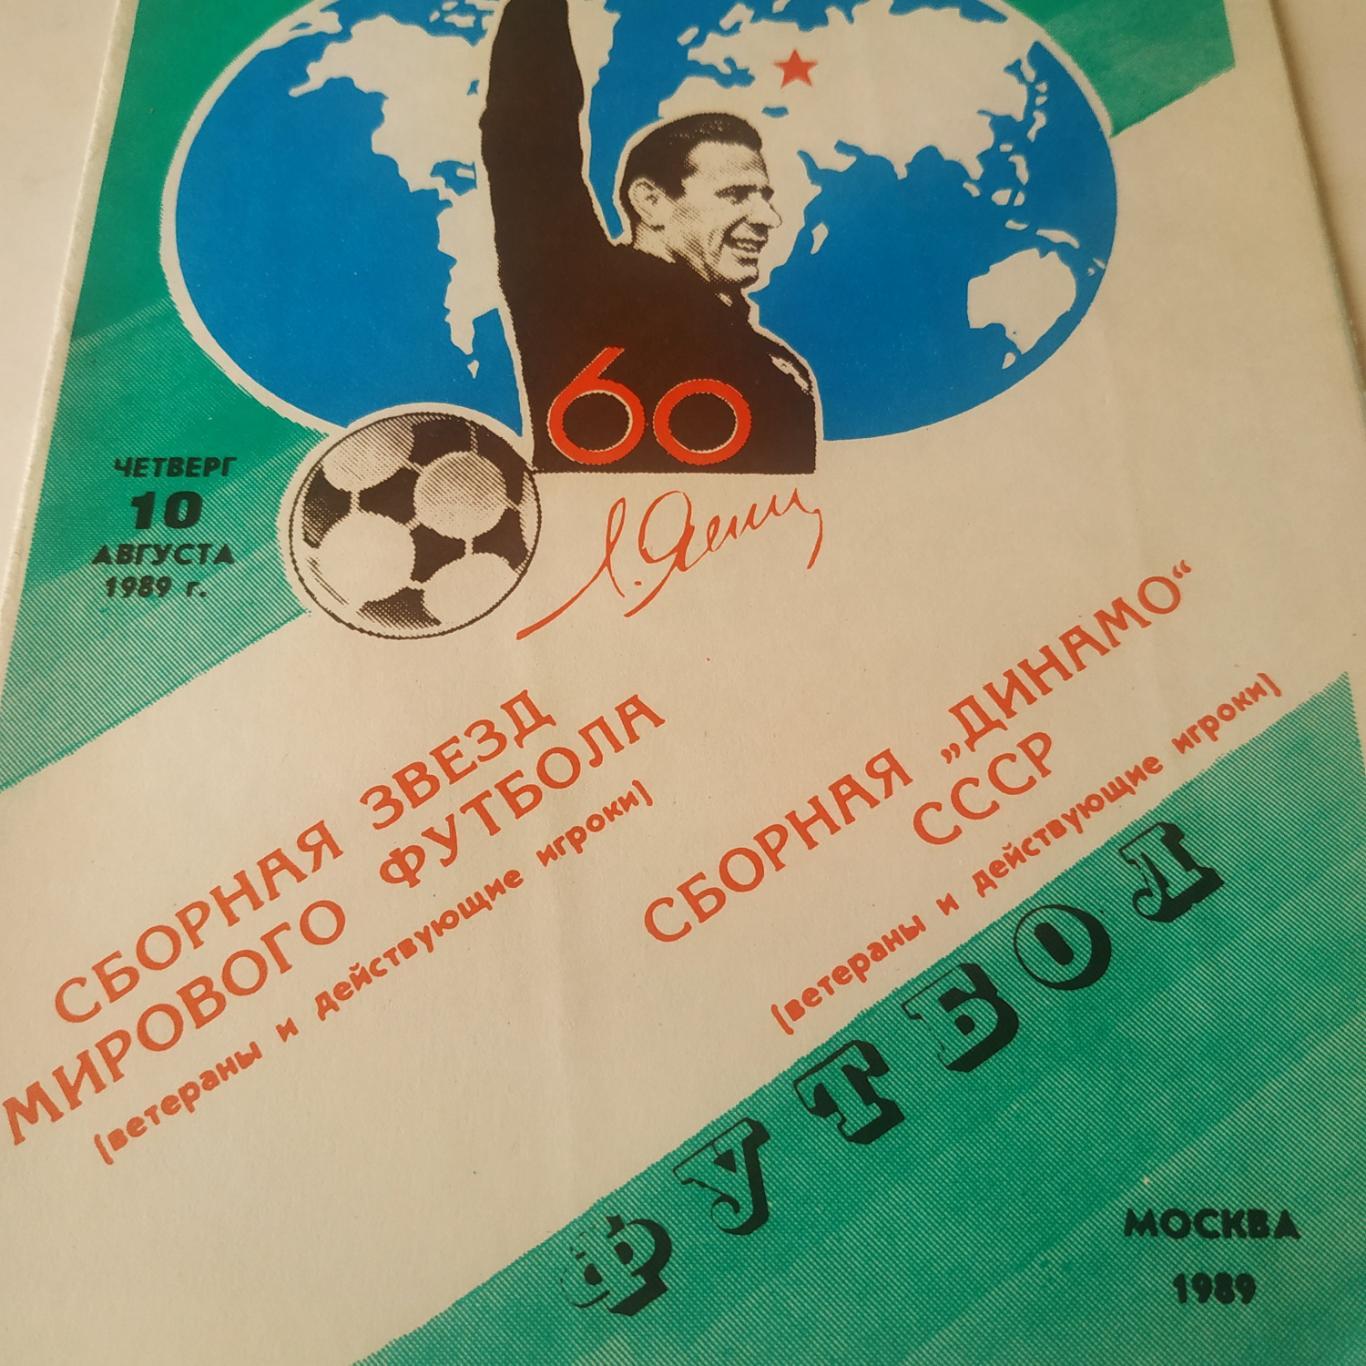 Сборная звёзд мирового футбола - Динамо (Москва) 1989